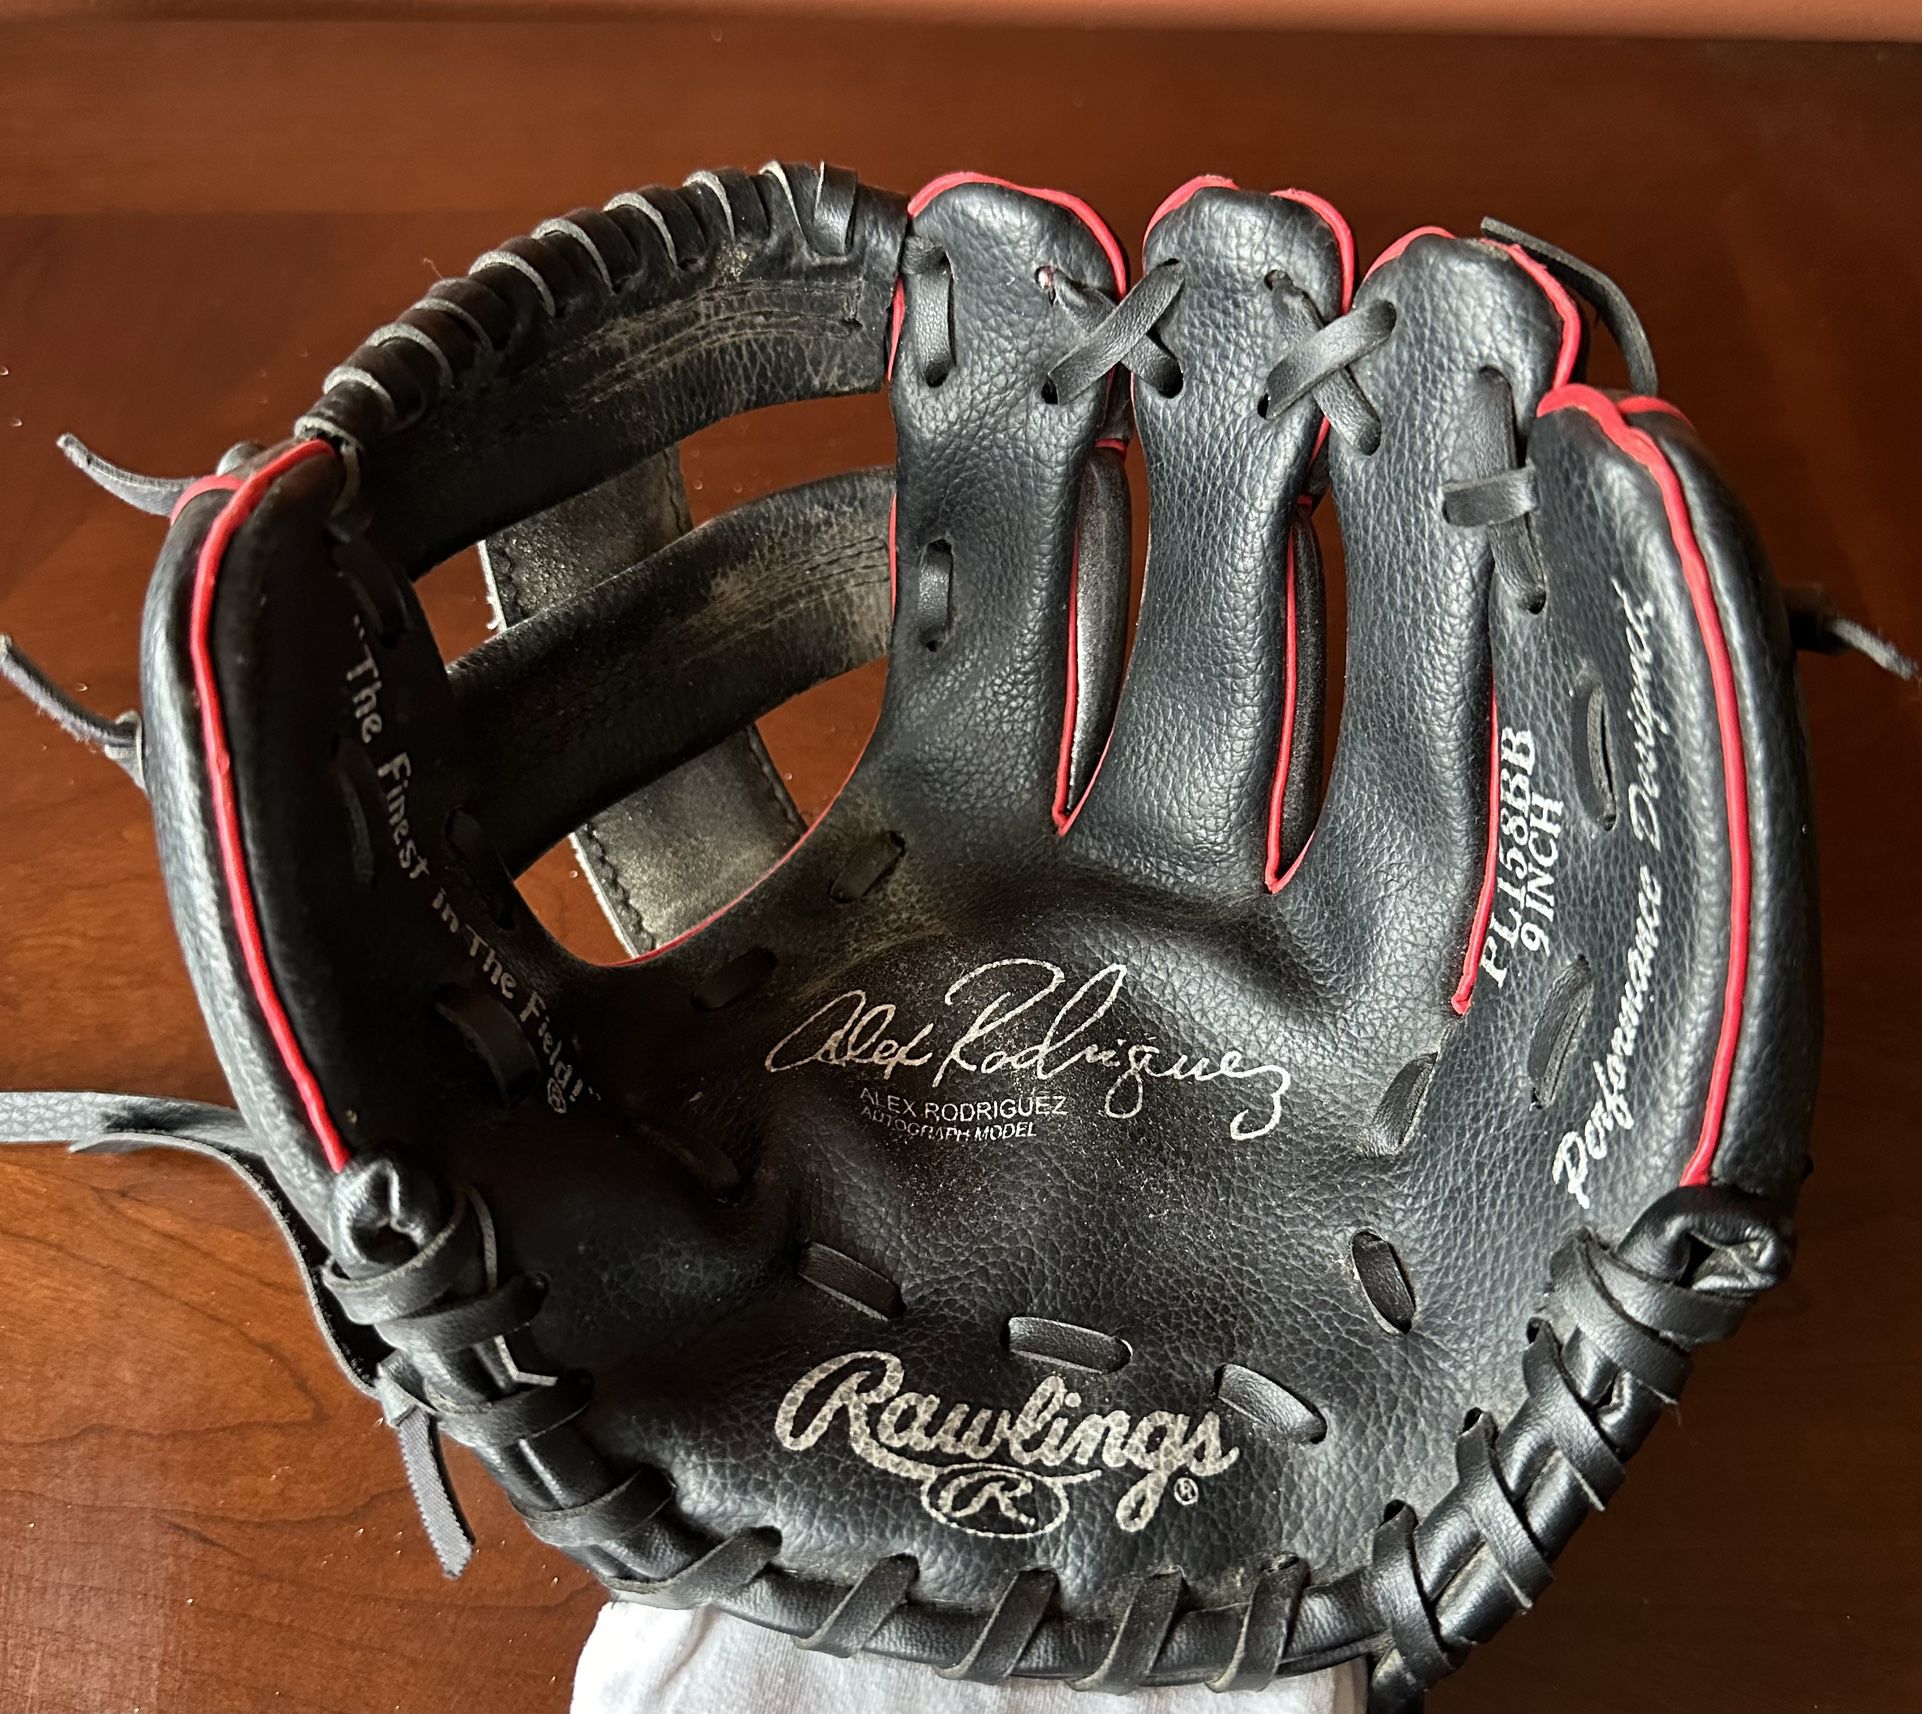 9” Youth Rawlings Baseball Glove